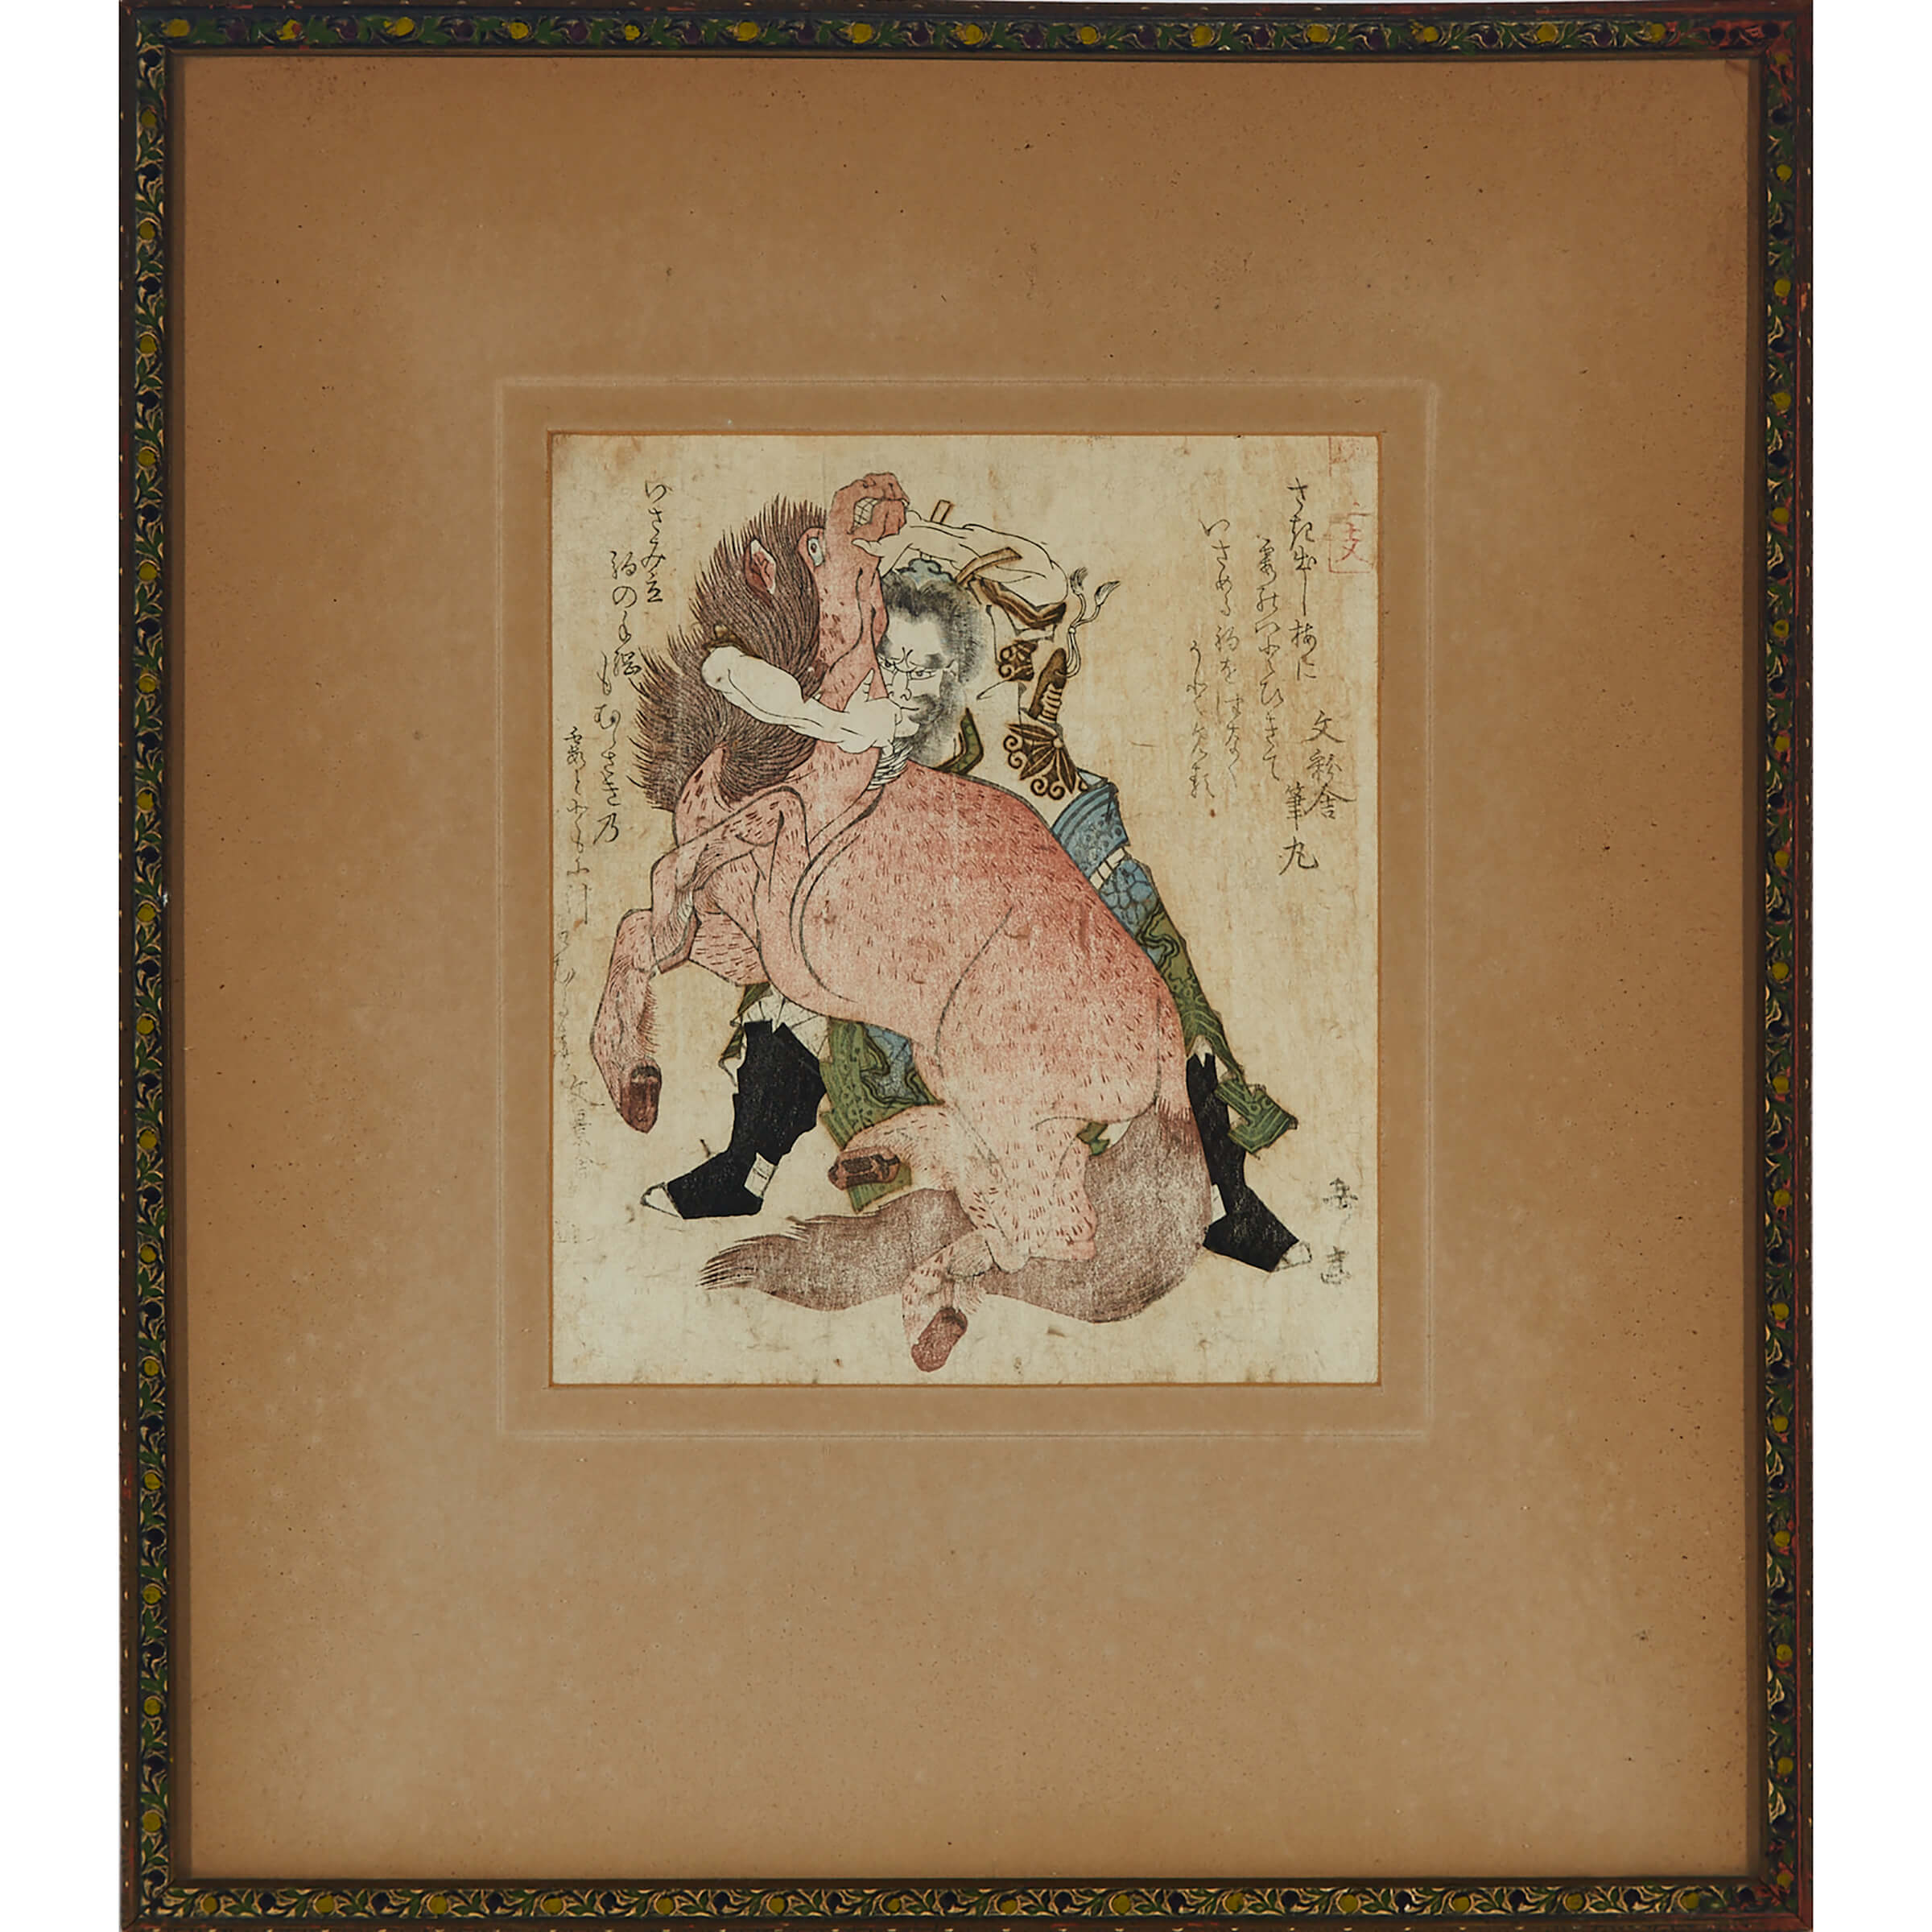 Yashima Gakutei (circa 1786-1868), Man Wrestling a Horse